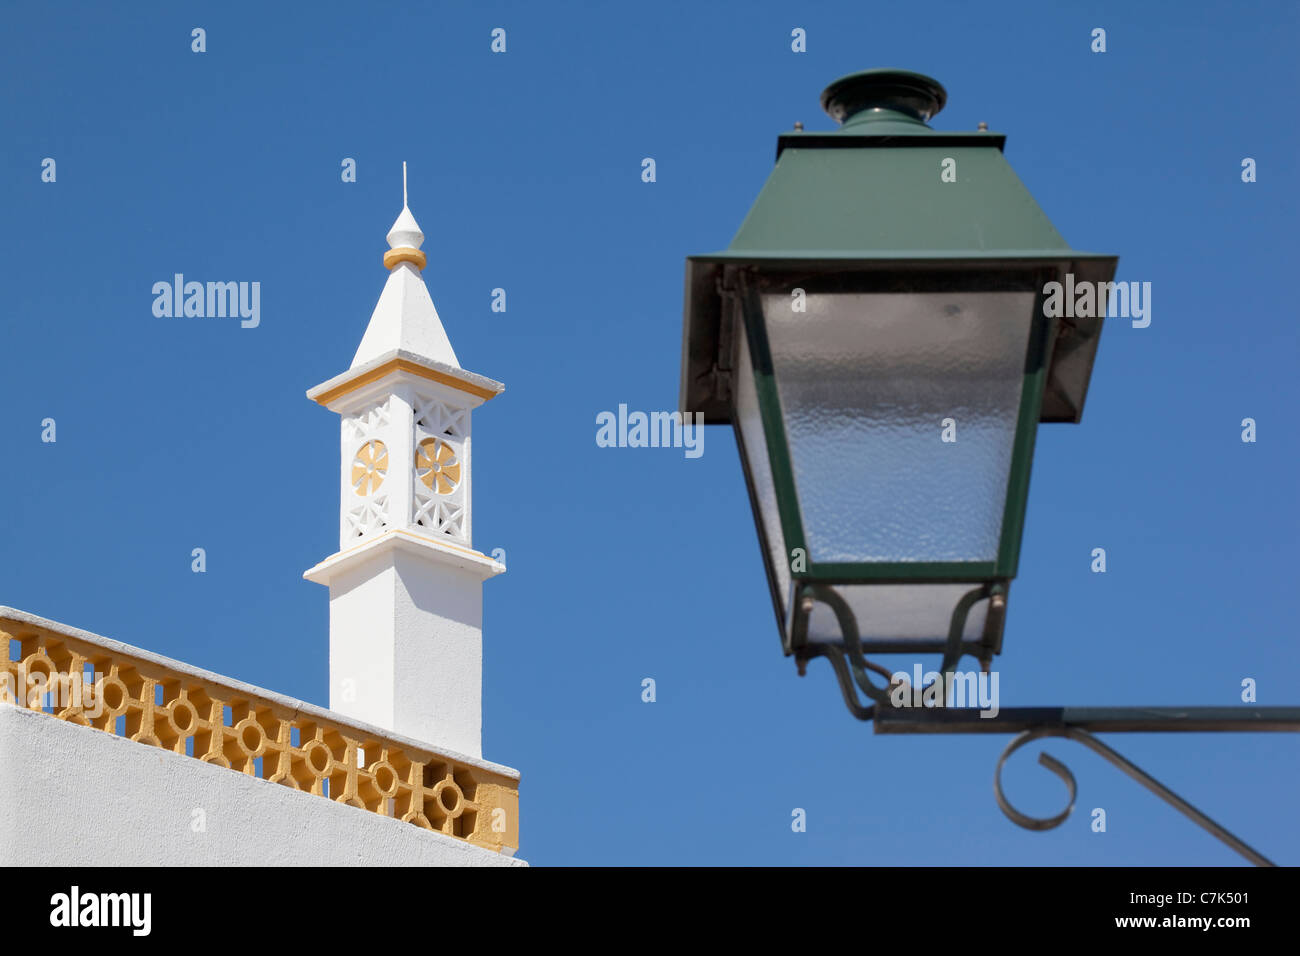 Portugal, Algarve, Alte, Lantern & Chimney Stock Photo